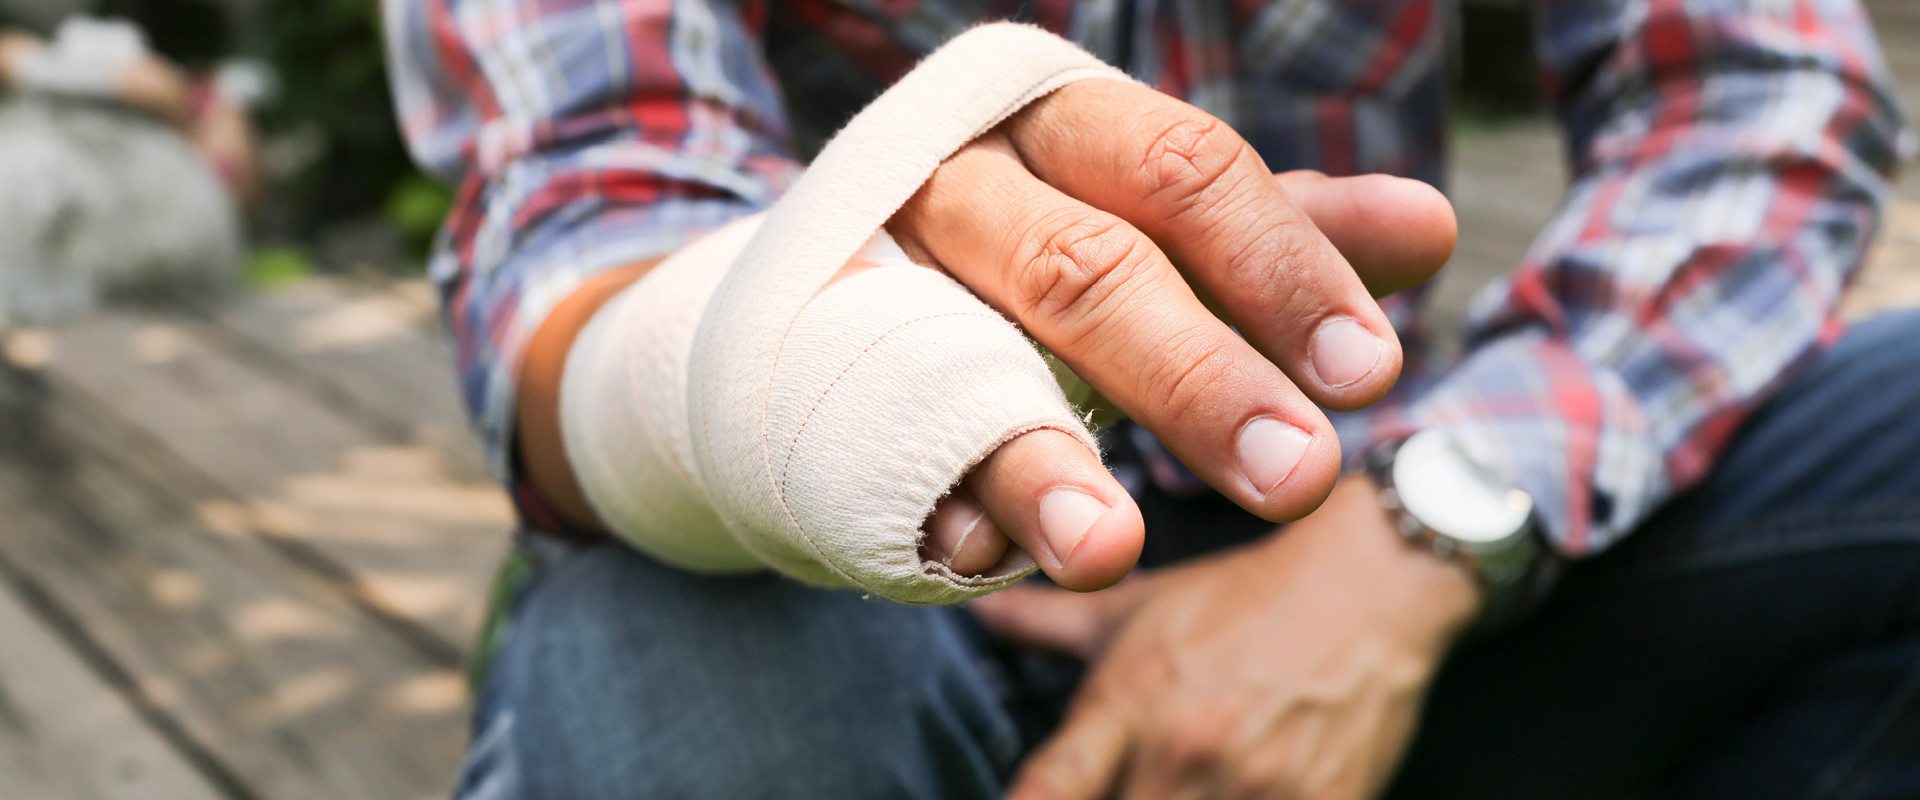 man with injured bandaged hand